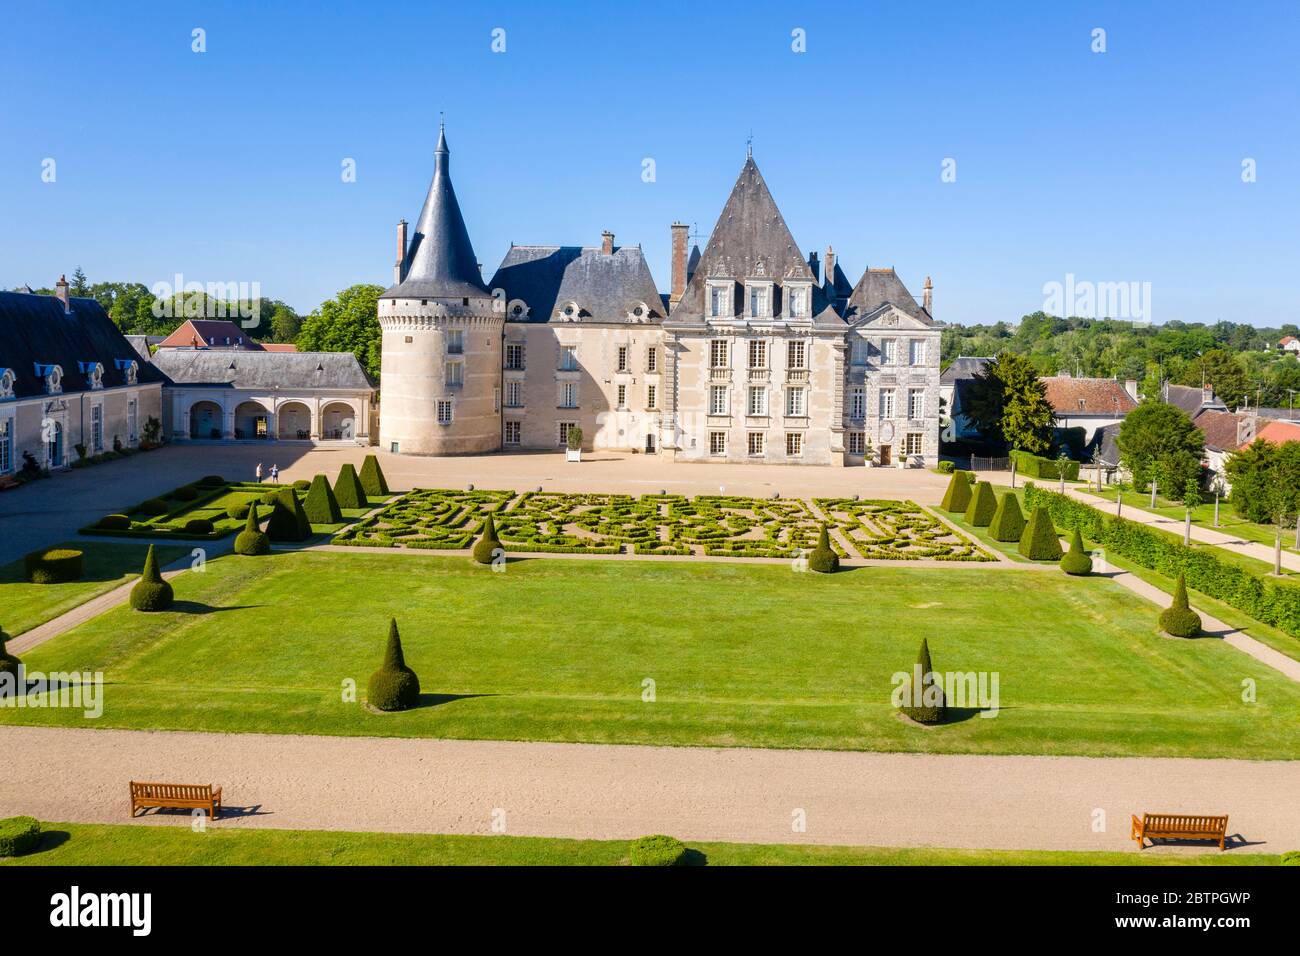 France, Indre, Brenne Regional Natural Park, Azay le Ferron, the castle, park and garden (aerial view) // France, Indre (36), Parc naturel régional de Stock Photo